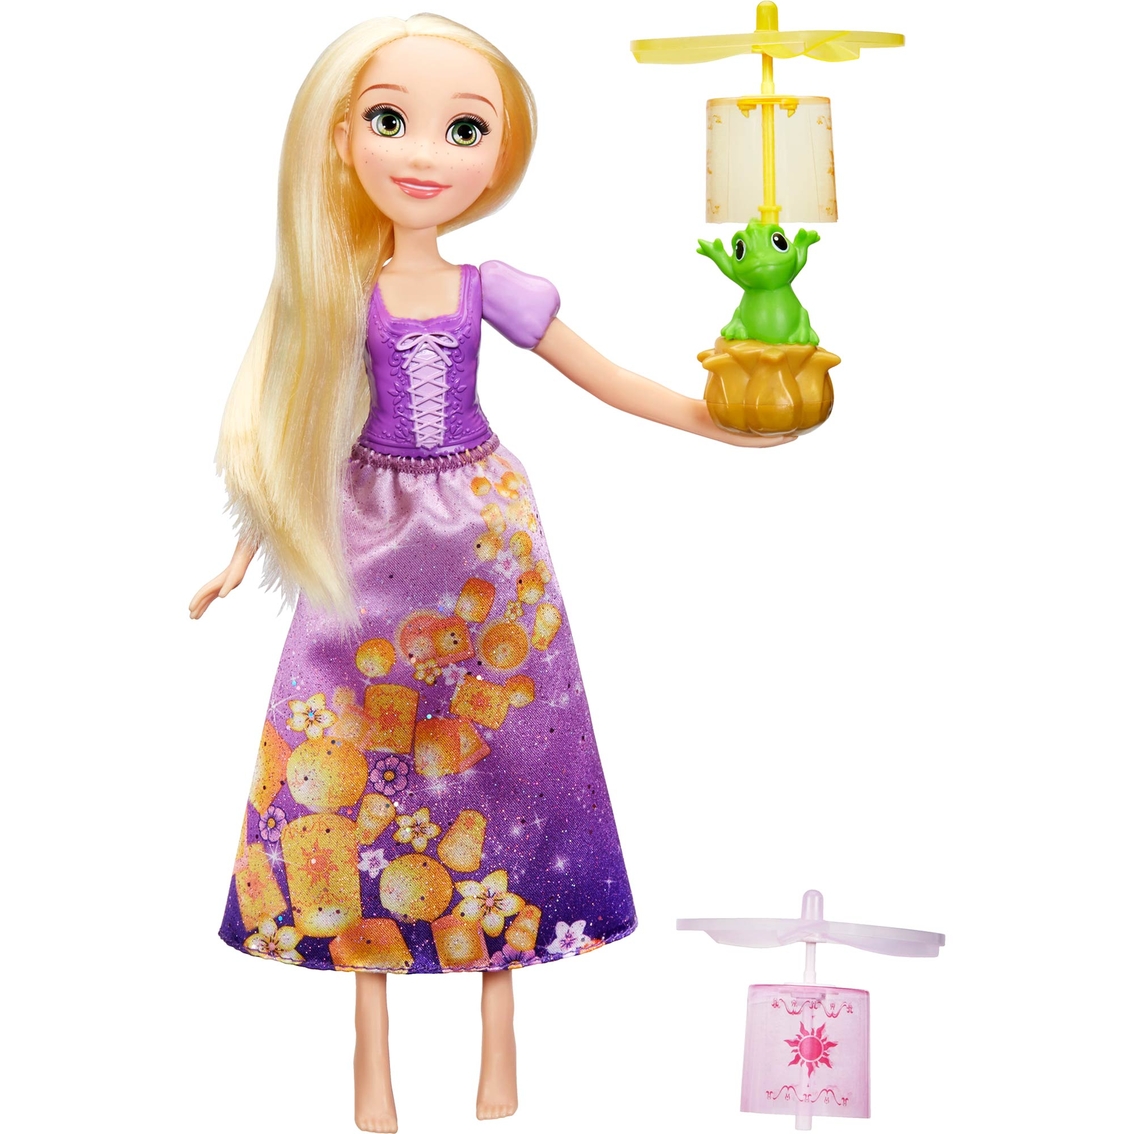 Hasbro Disney Princess Rapunzel Floating Lanterns Doll - Image 2 of 2